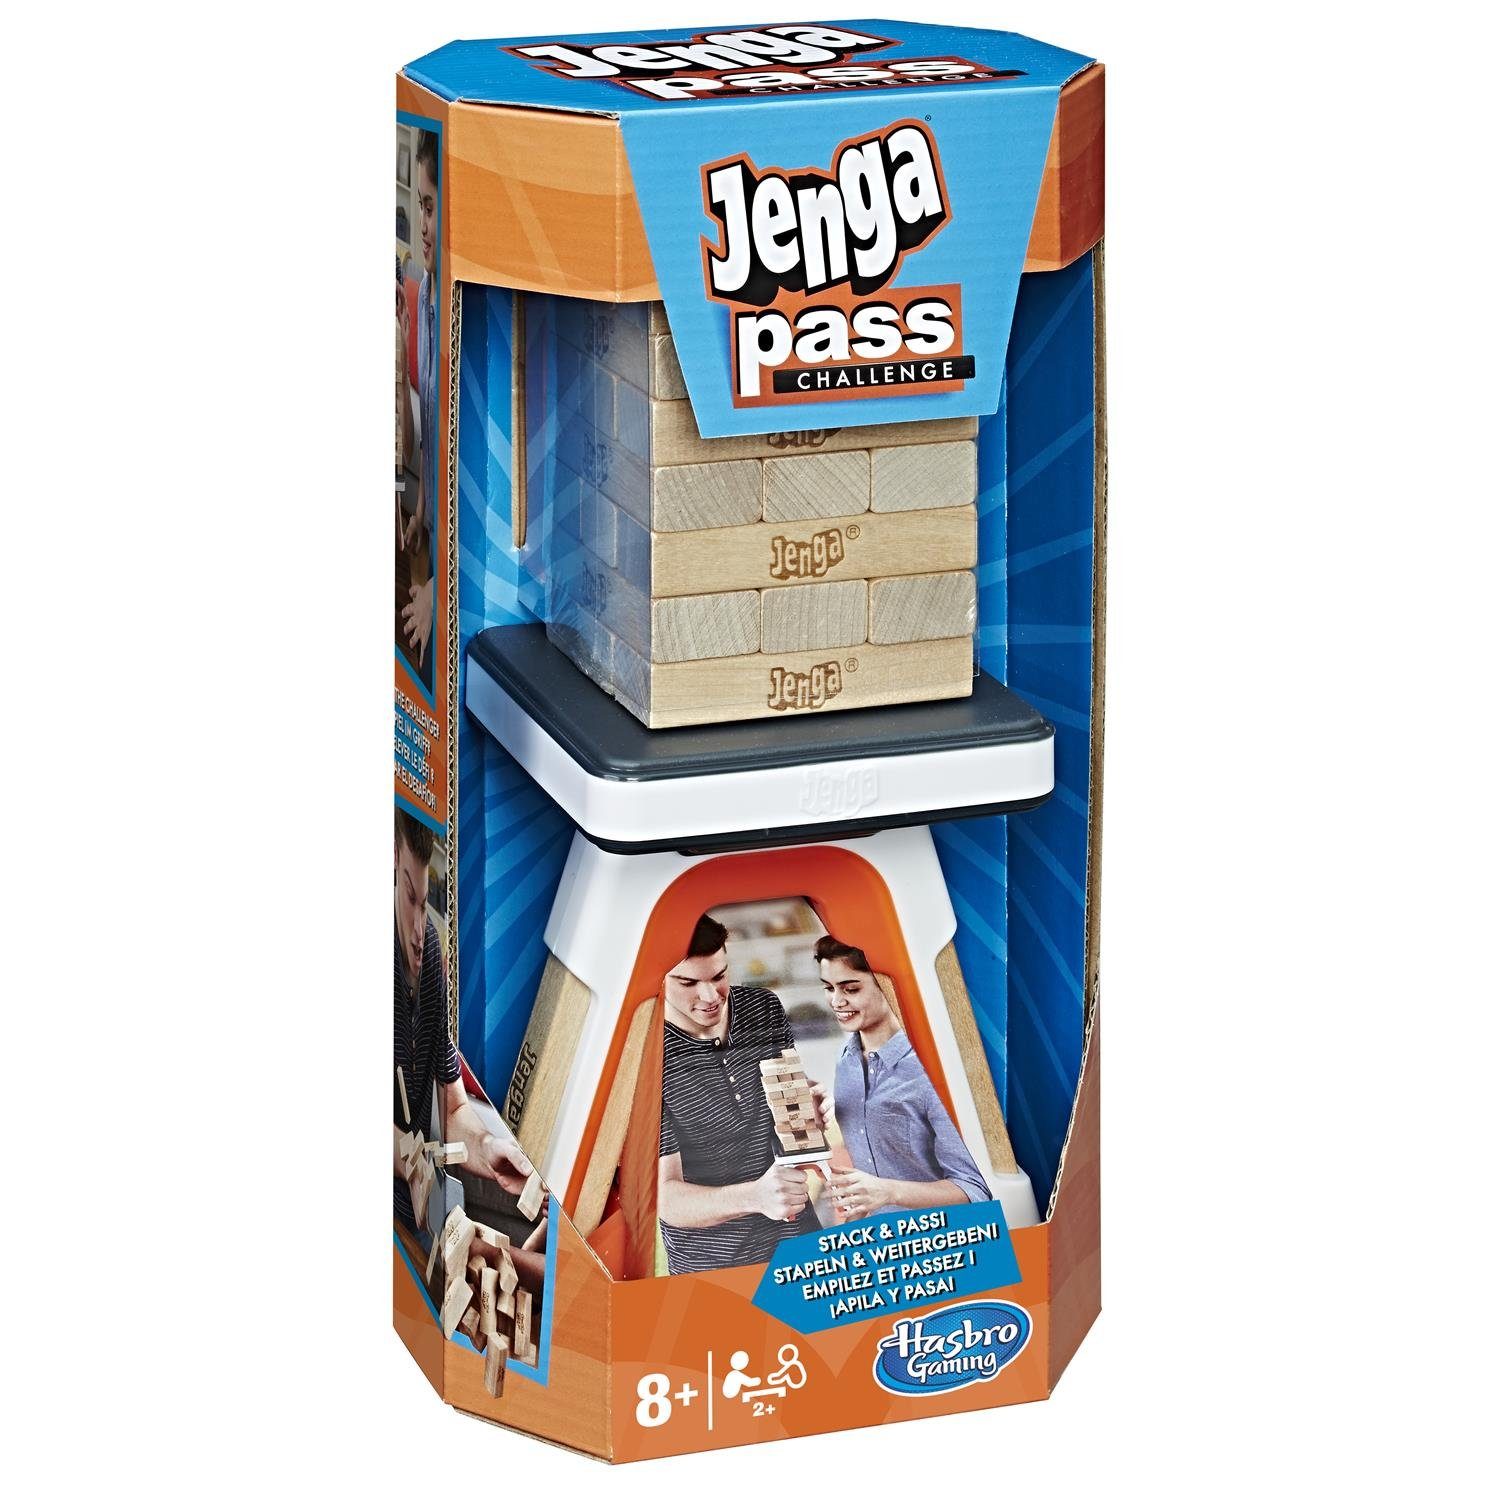 Hasbro Spielesammlung, Hasbro E0585EU4 - Hasbro Gaming - Jenga Pass Challenge